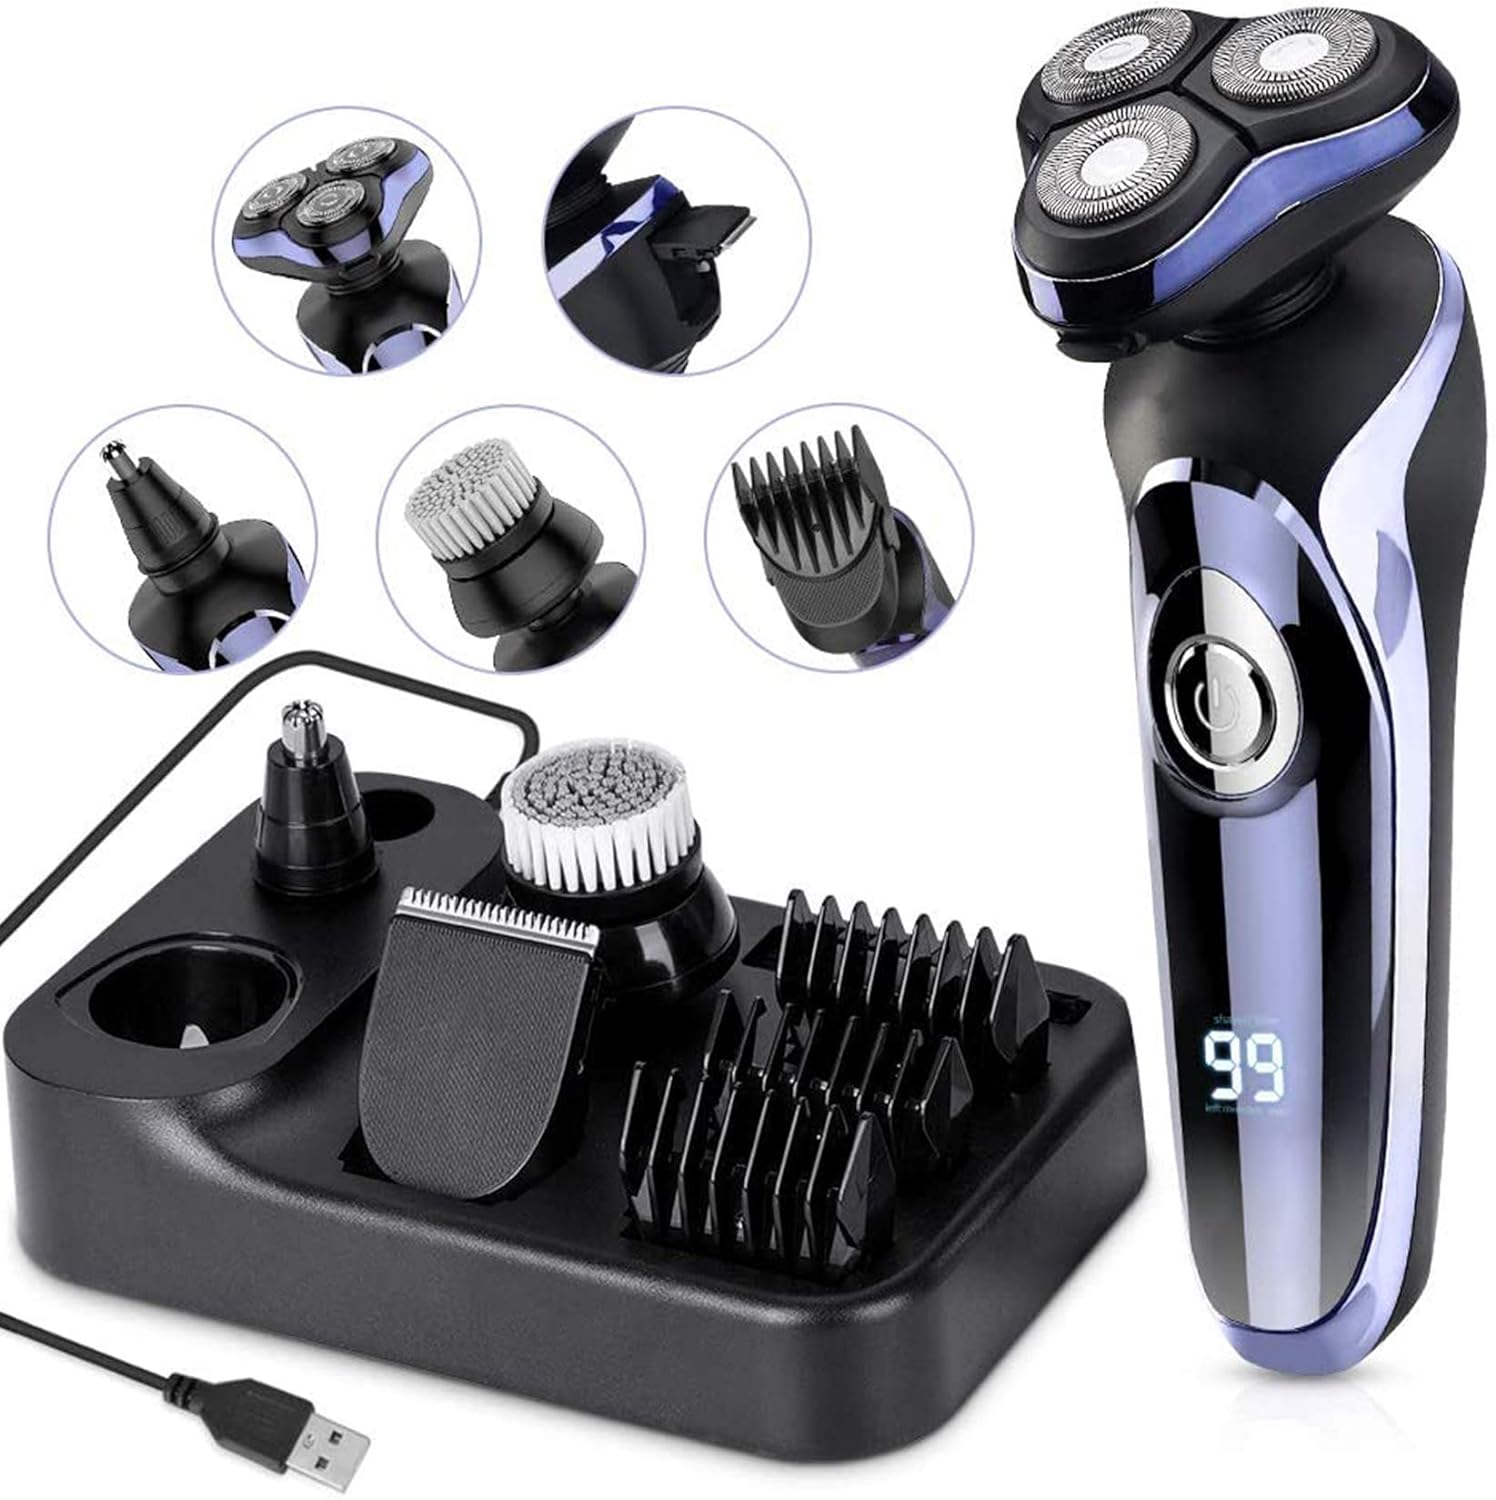  Mini afeitadora eléctrica portátil, recargable por USB, la  mejor maquinilla de afeitar con impermeable, compacta, inalámbrica, carga  rápida, bigote, recortadora de nariz para uso húmedo y seco